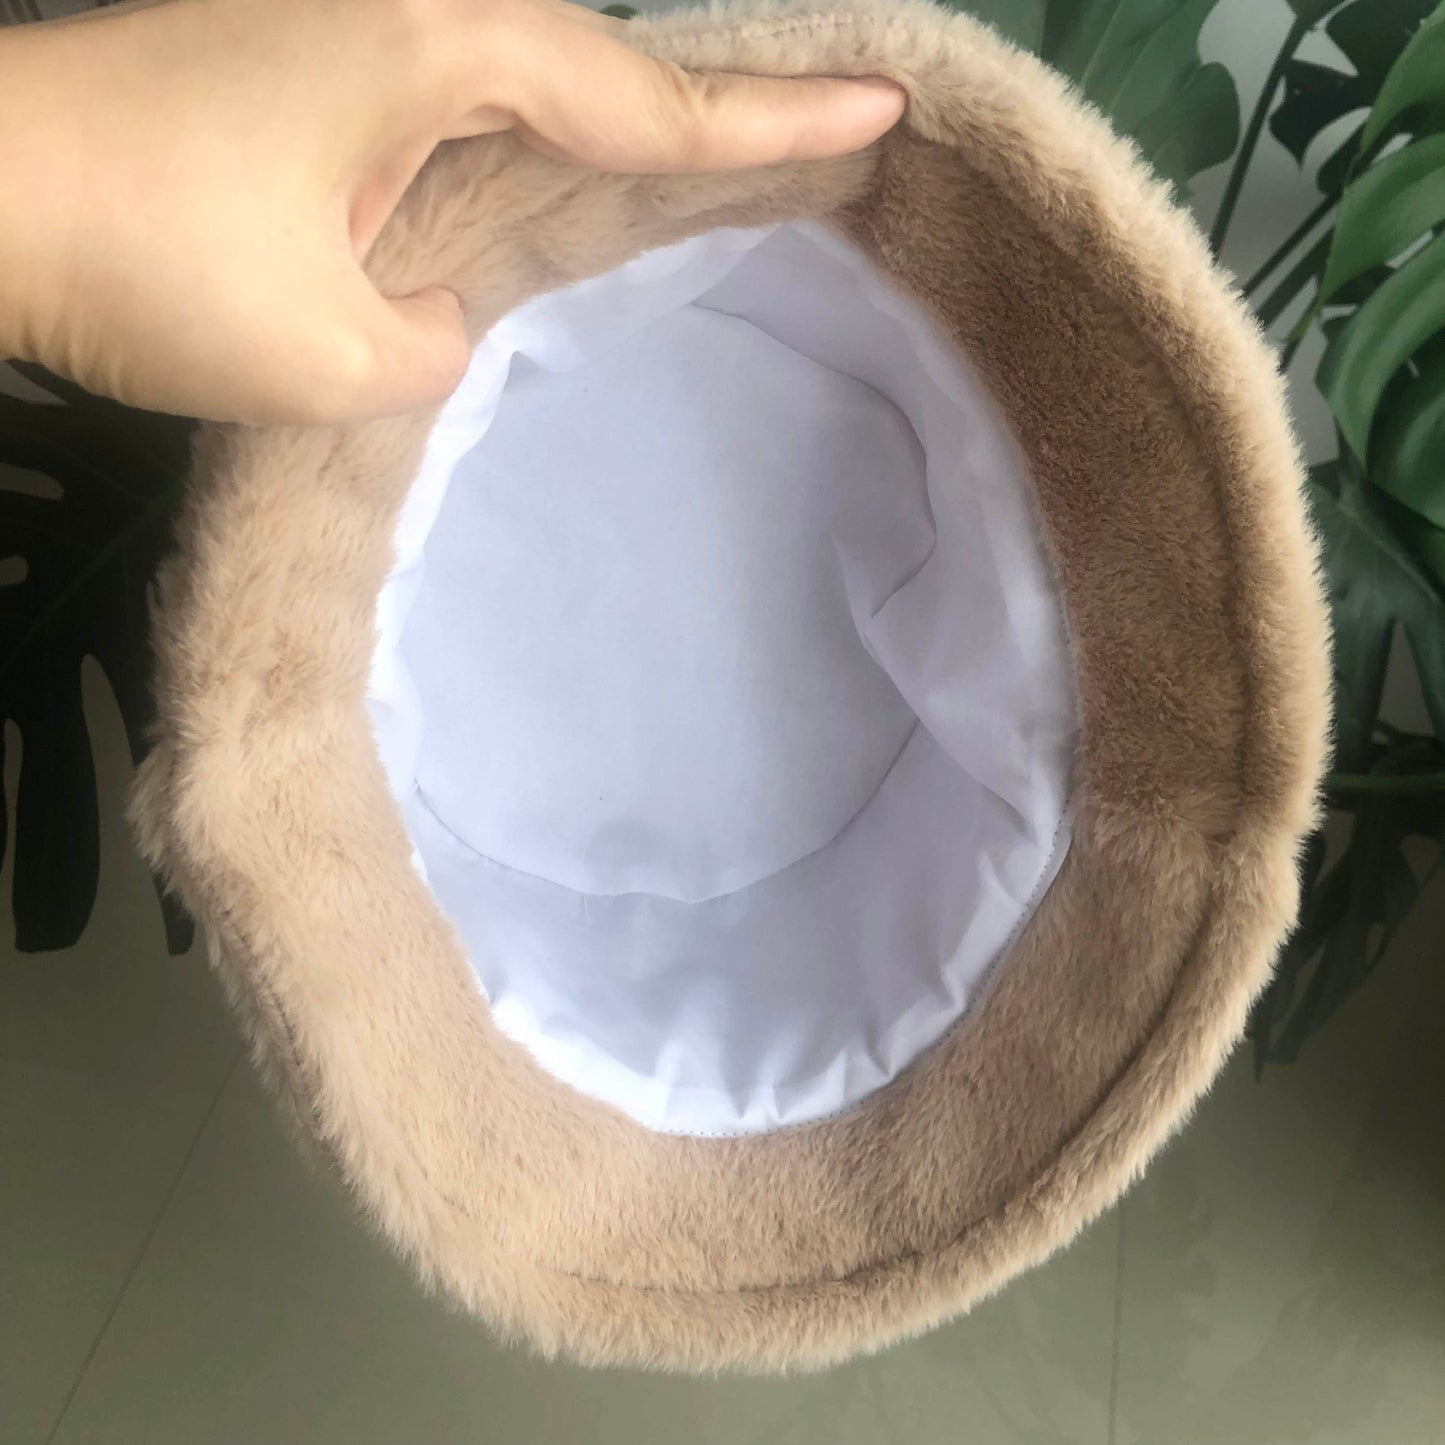 RKIVE Fuzzy Bucket Hat [PREORDER]